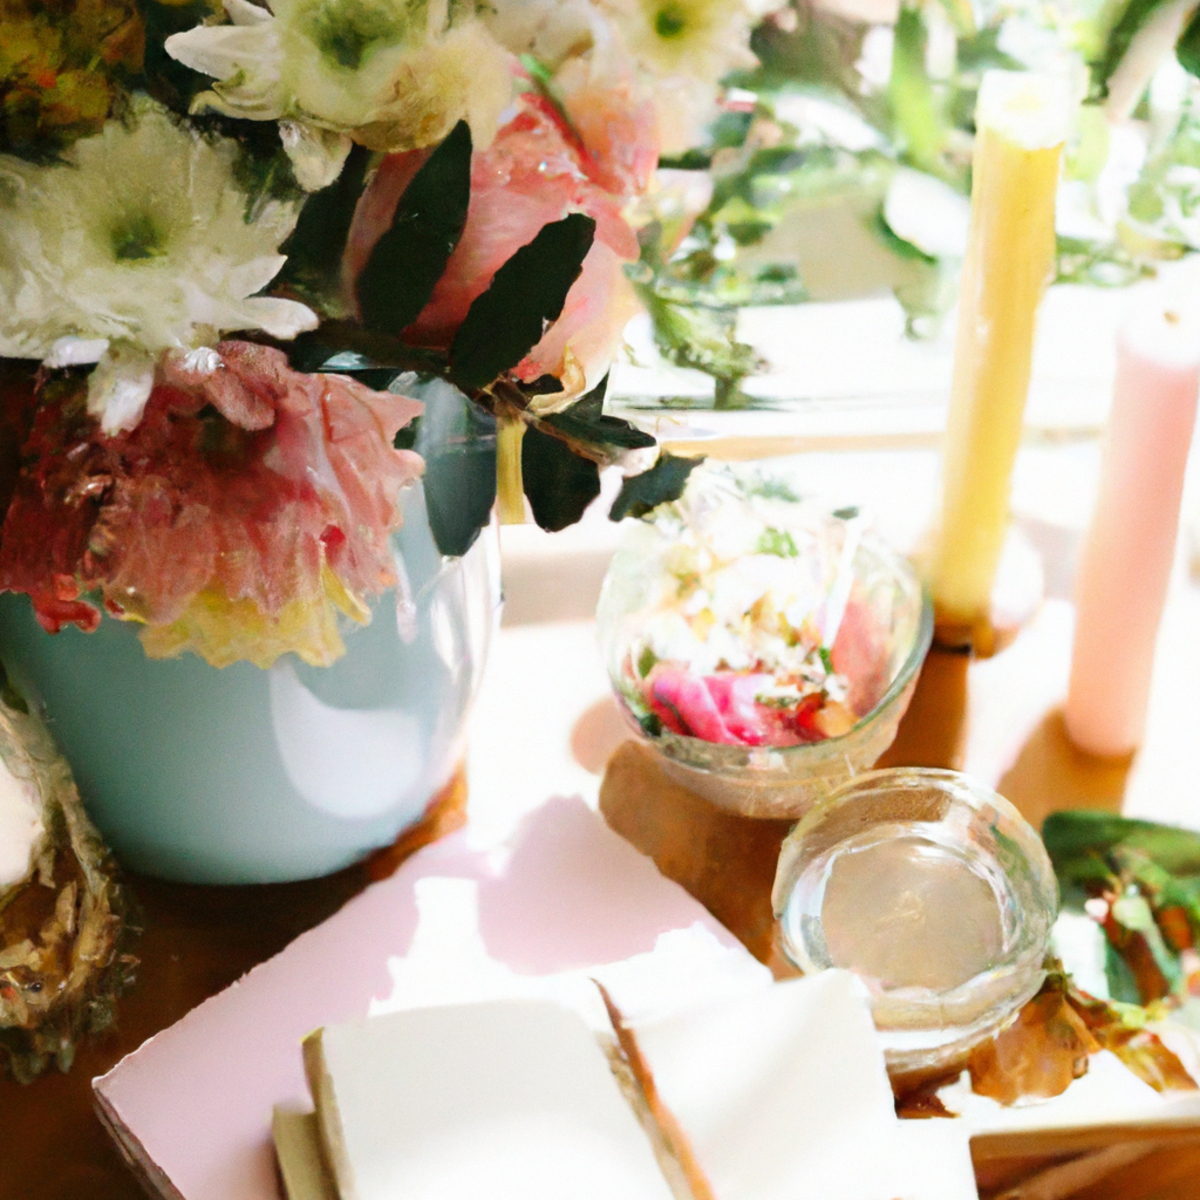 Serene scene of self-care: vibrant flowers, journal of gratitude, herbal tea, cozy armchair, and warm sunlight.